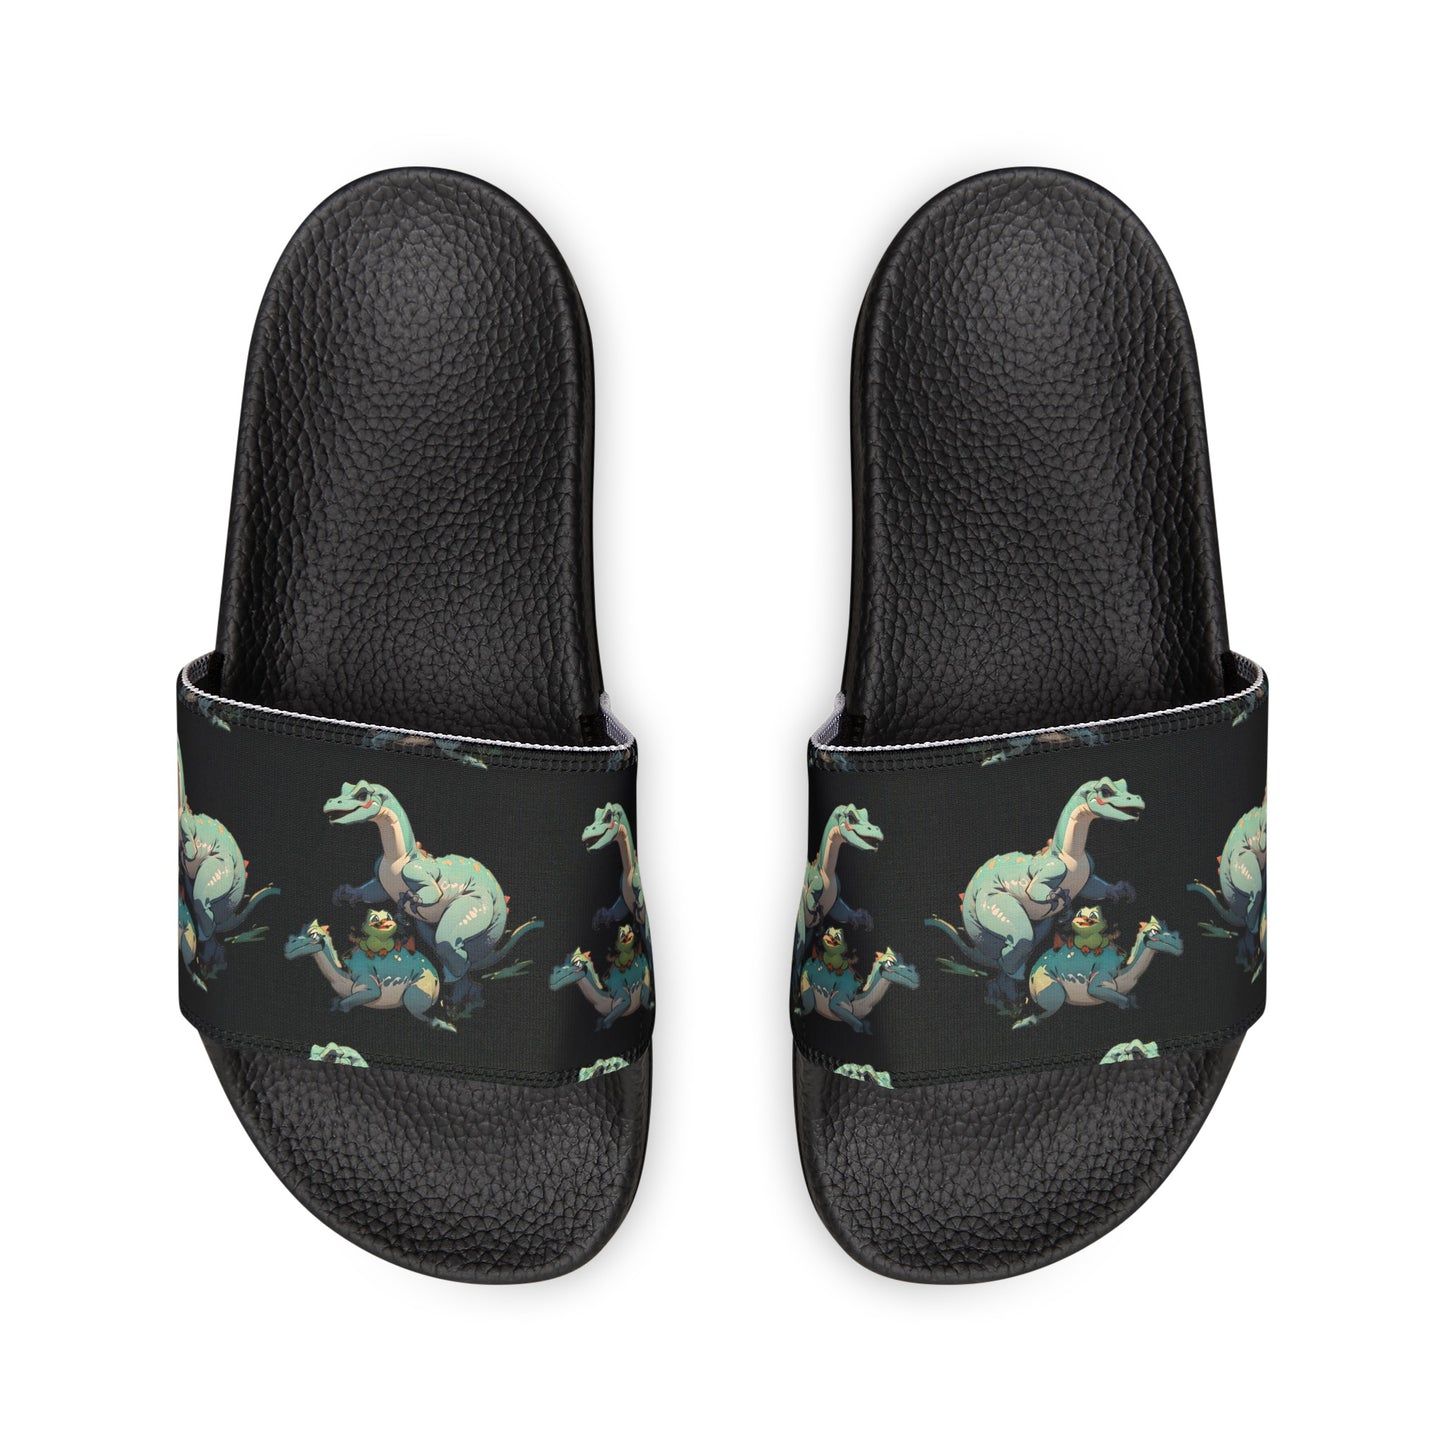 Dino-Stomping Slide Sandals: Rad Summer Fun for Kids